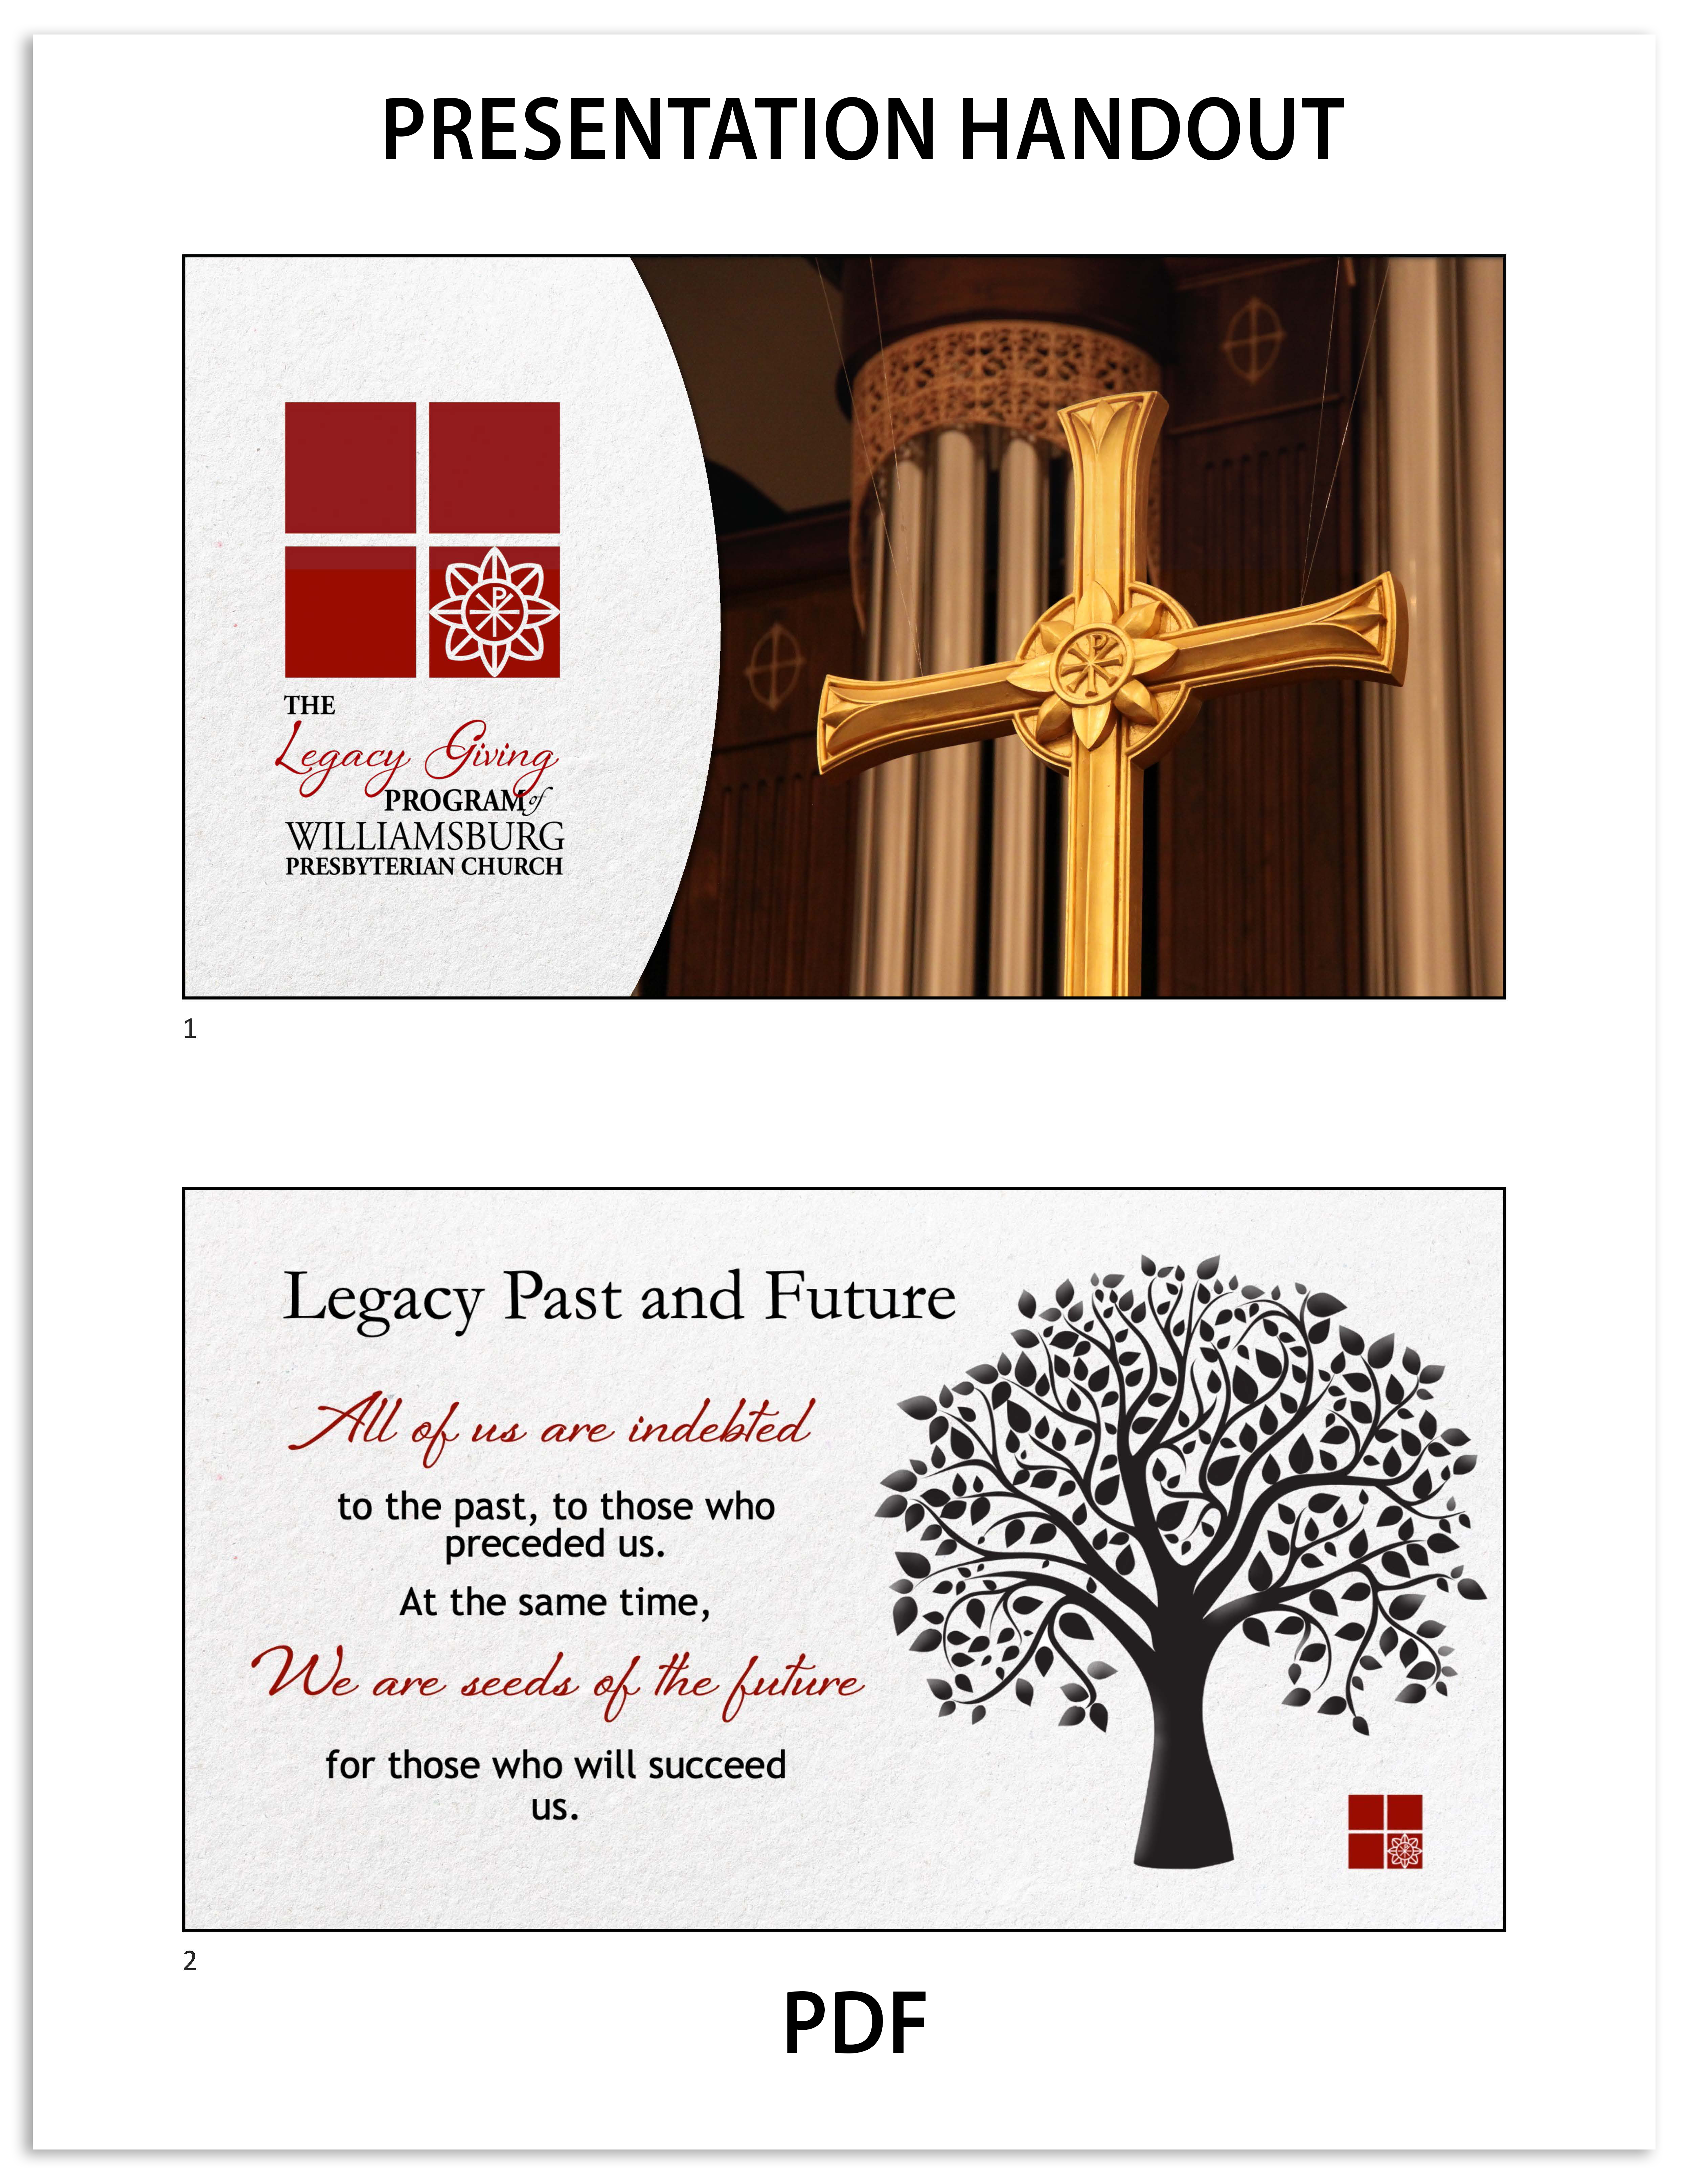 Legacy Giving Presentation Handout